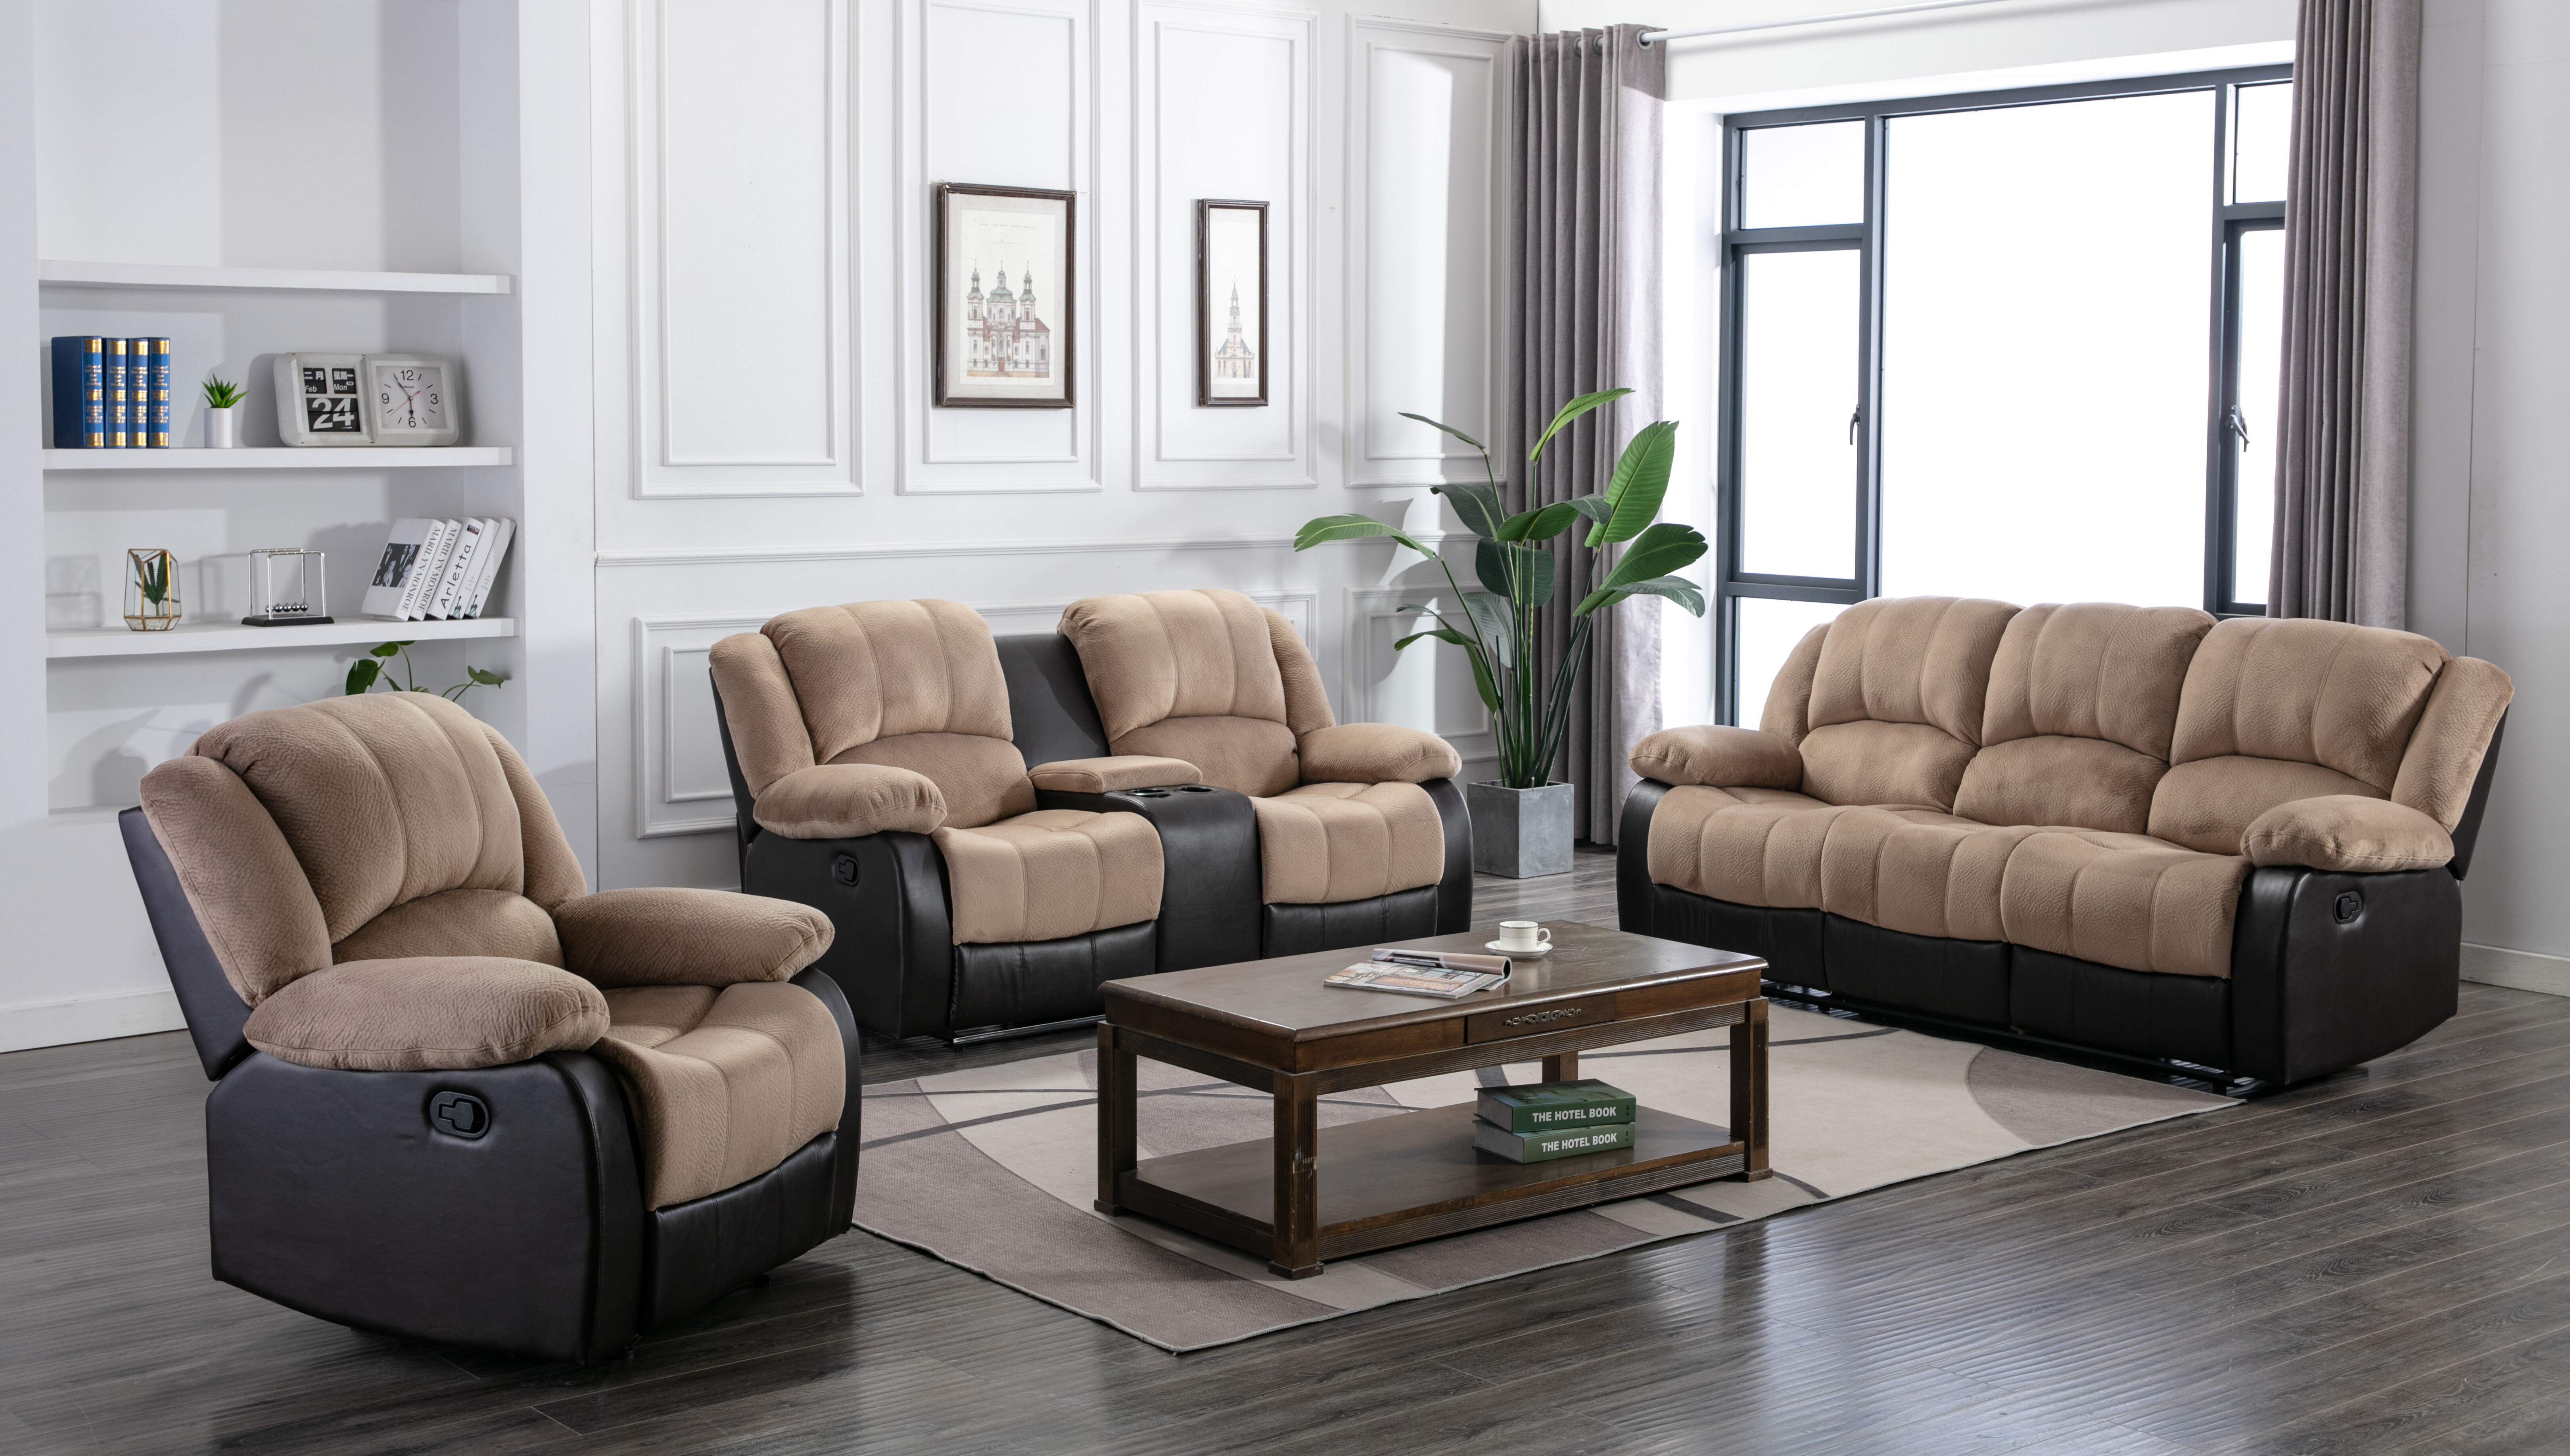 Winston Porter Perrysburg 3 Piece Leather Reclining Living Room Set Reviews Wayfair